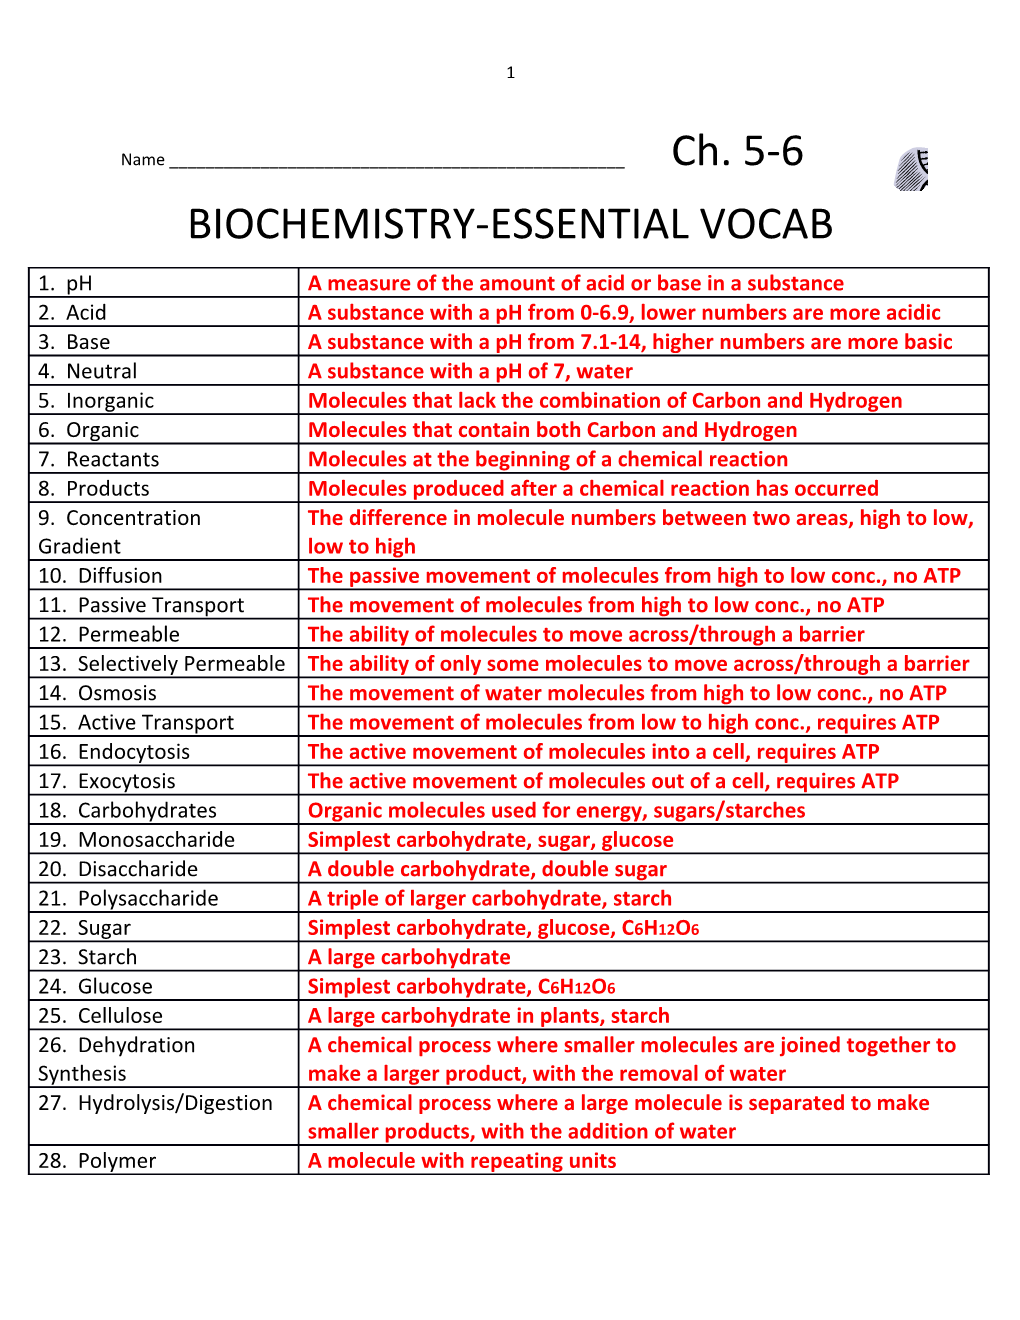 Biochemistry-Essential Vocab